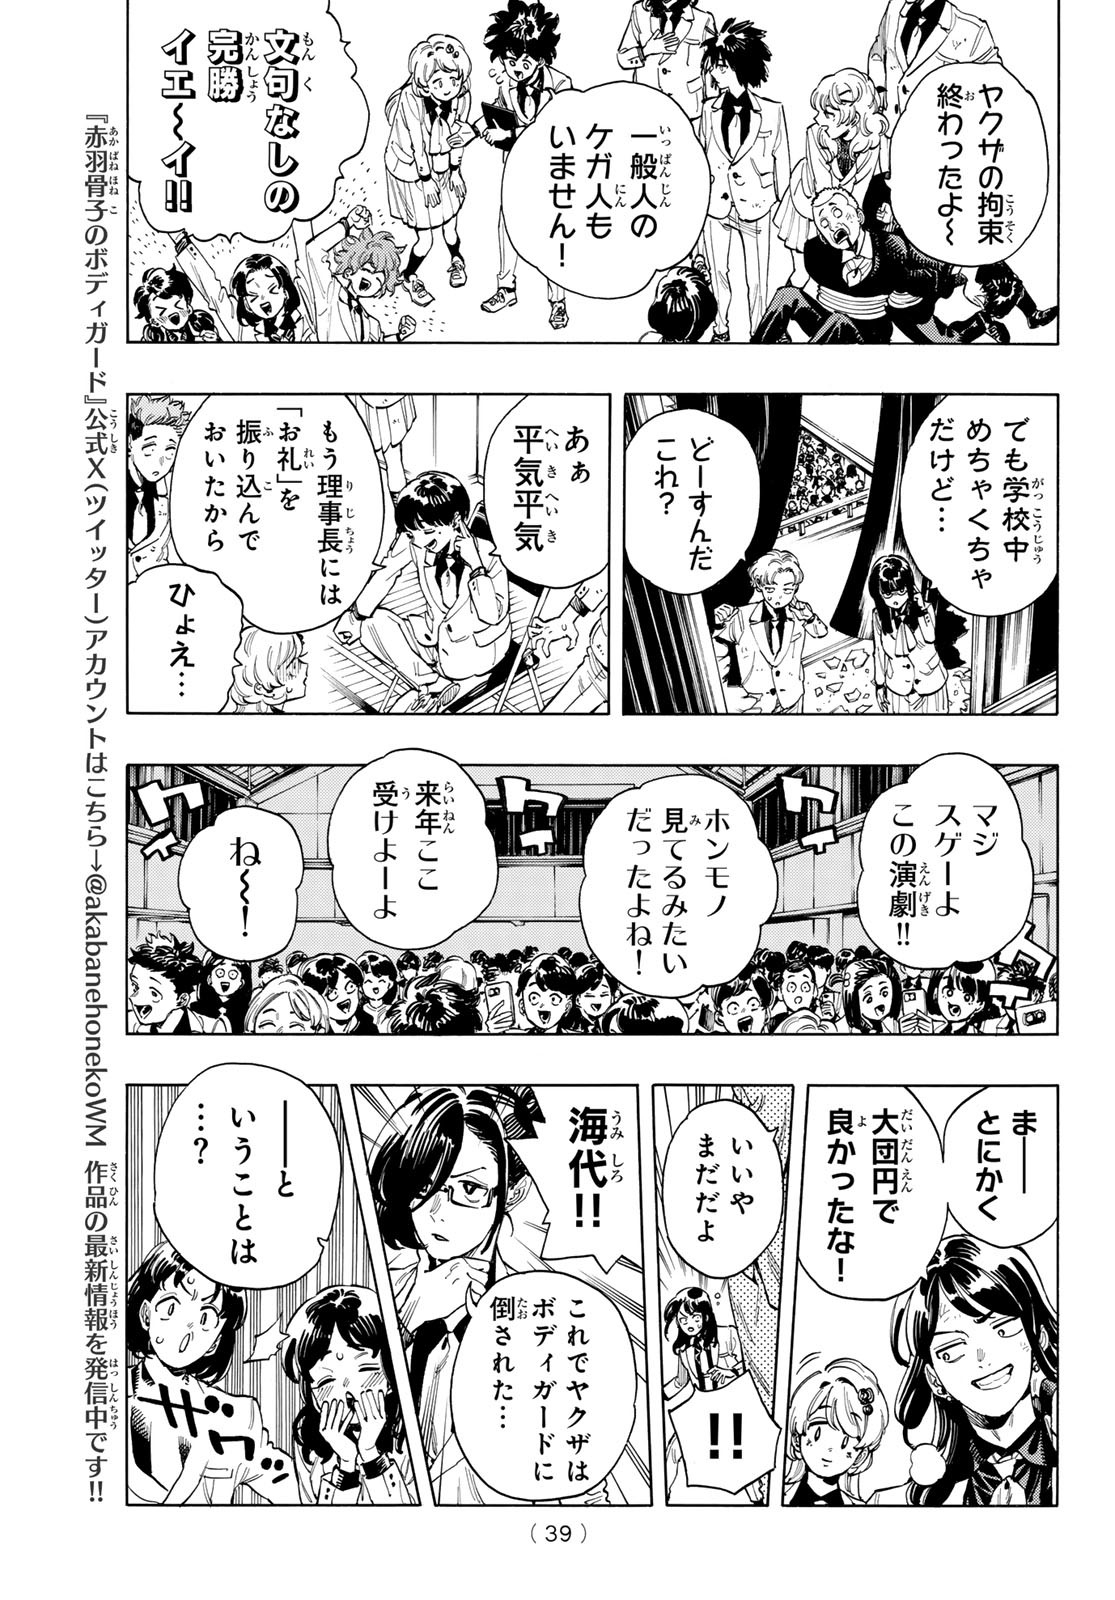 Akabane Honeko no Bodyguard - Chapter 64 - Page 3